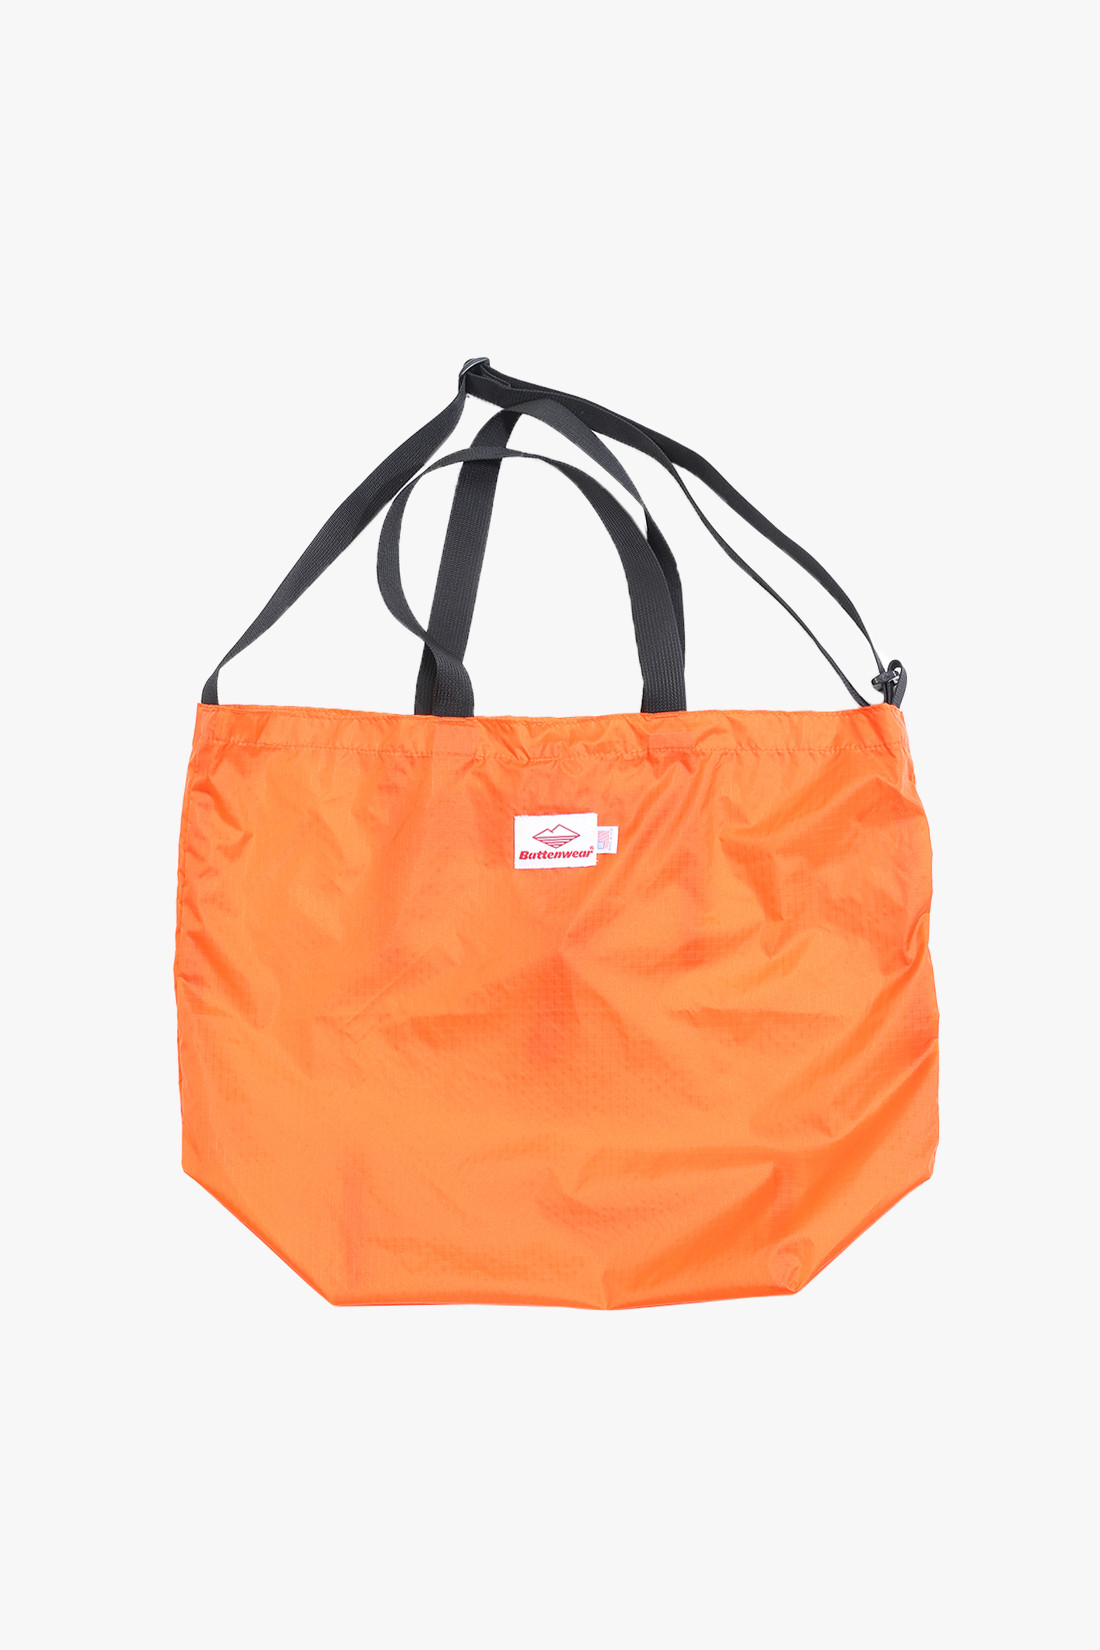 Packable totebag ripstop nylon Orange